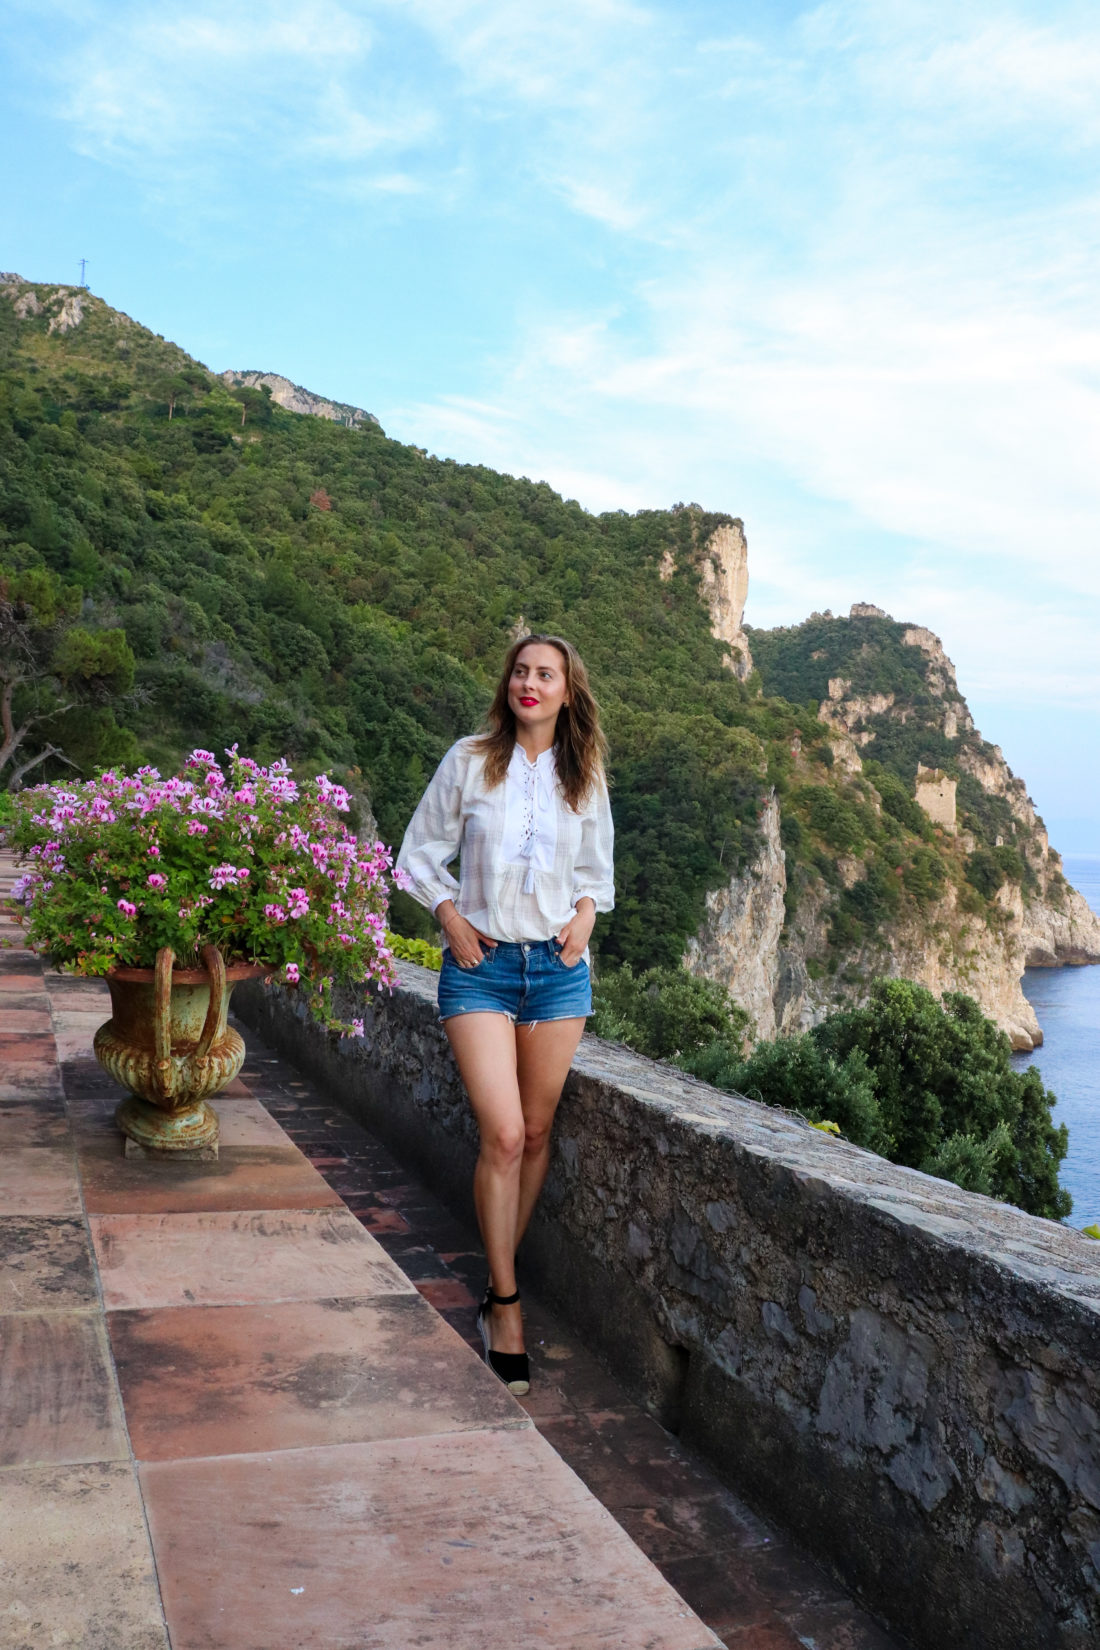 Eva Amurri Martino stands on the edge of a cliff in the Amalfi Coast